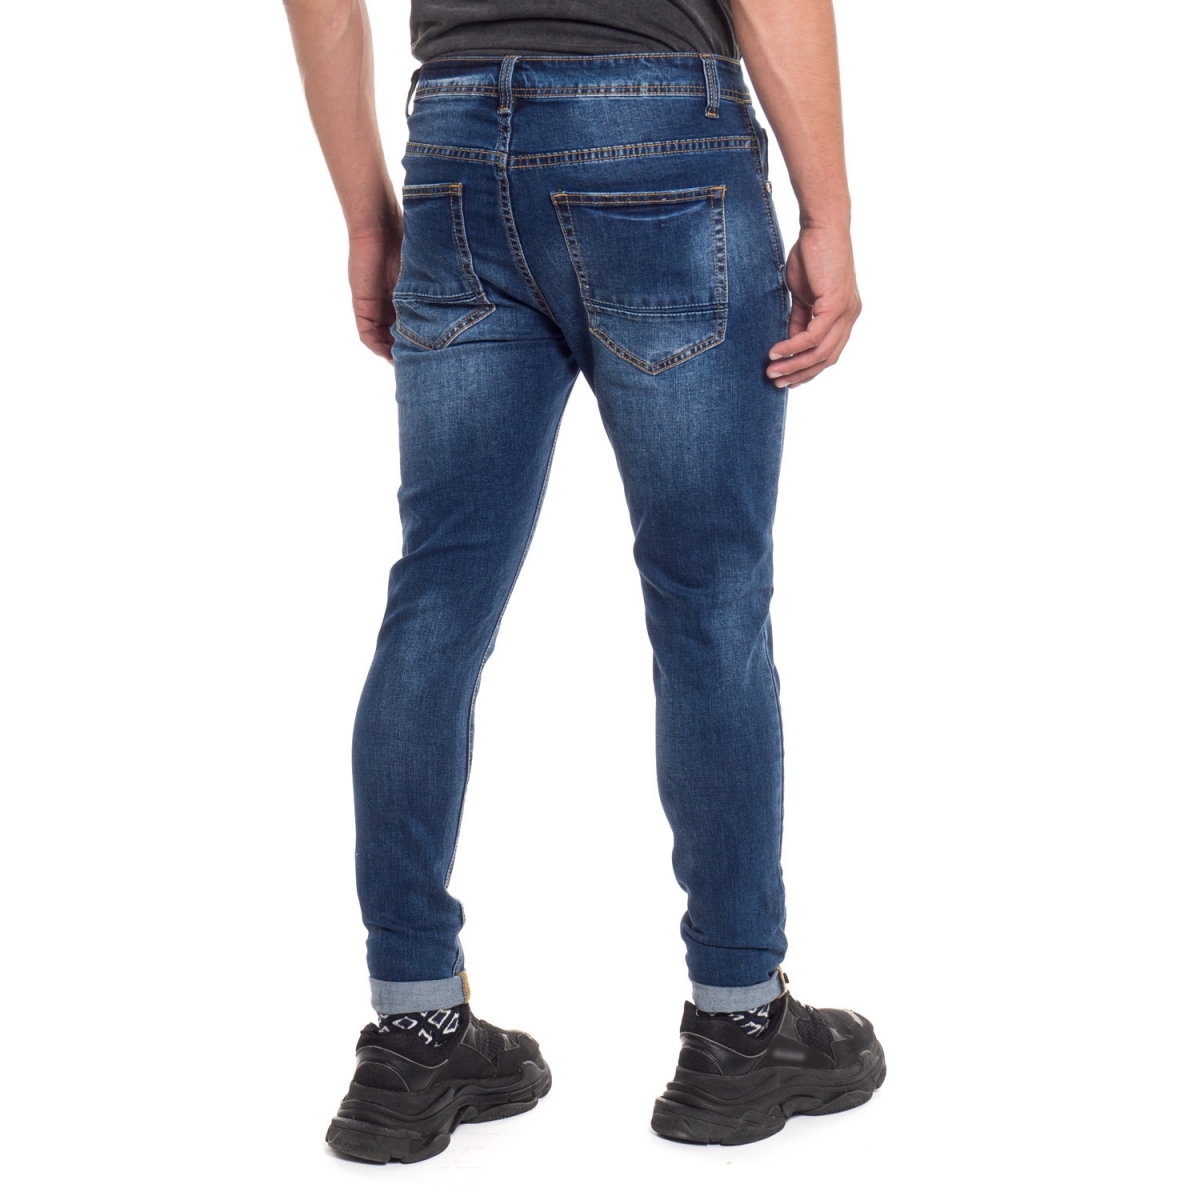 Kleidung Jeans mann Jeans LPM2214 LANDEK PARK Cafedelmar Shop